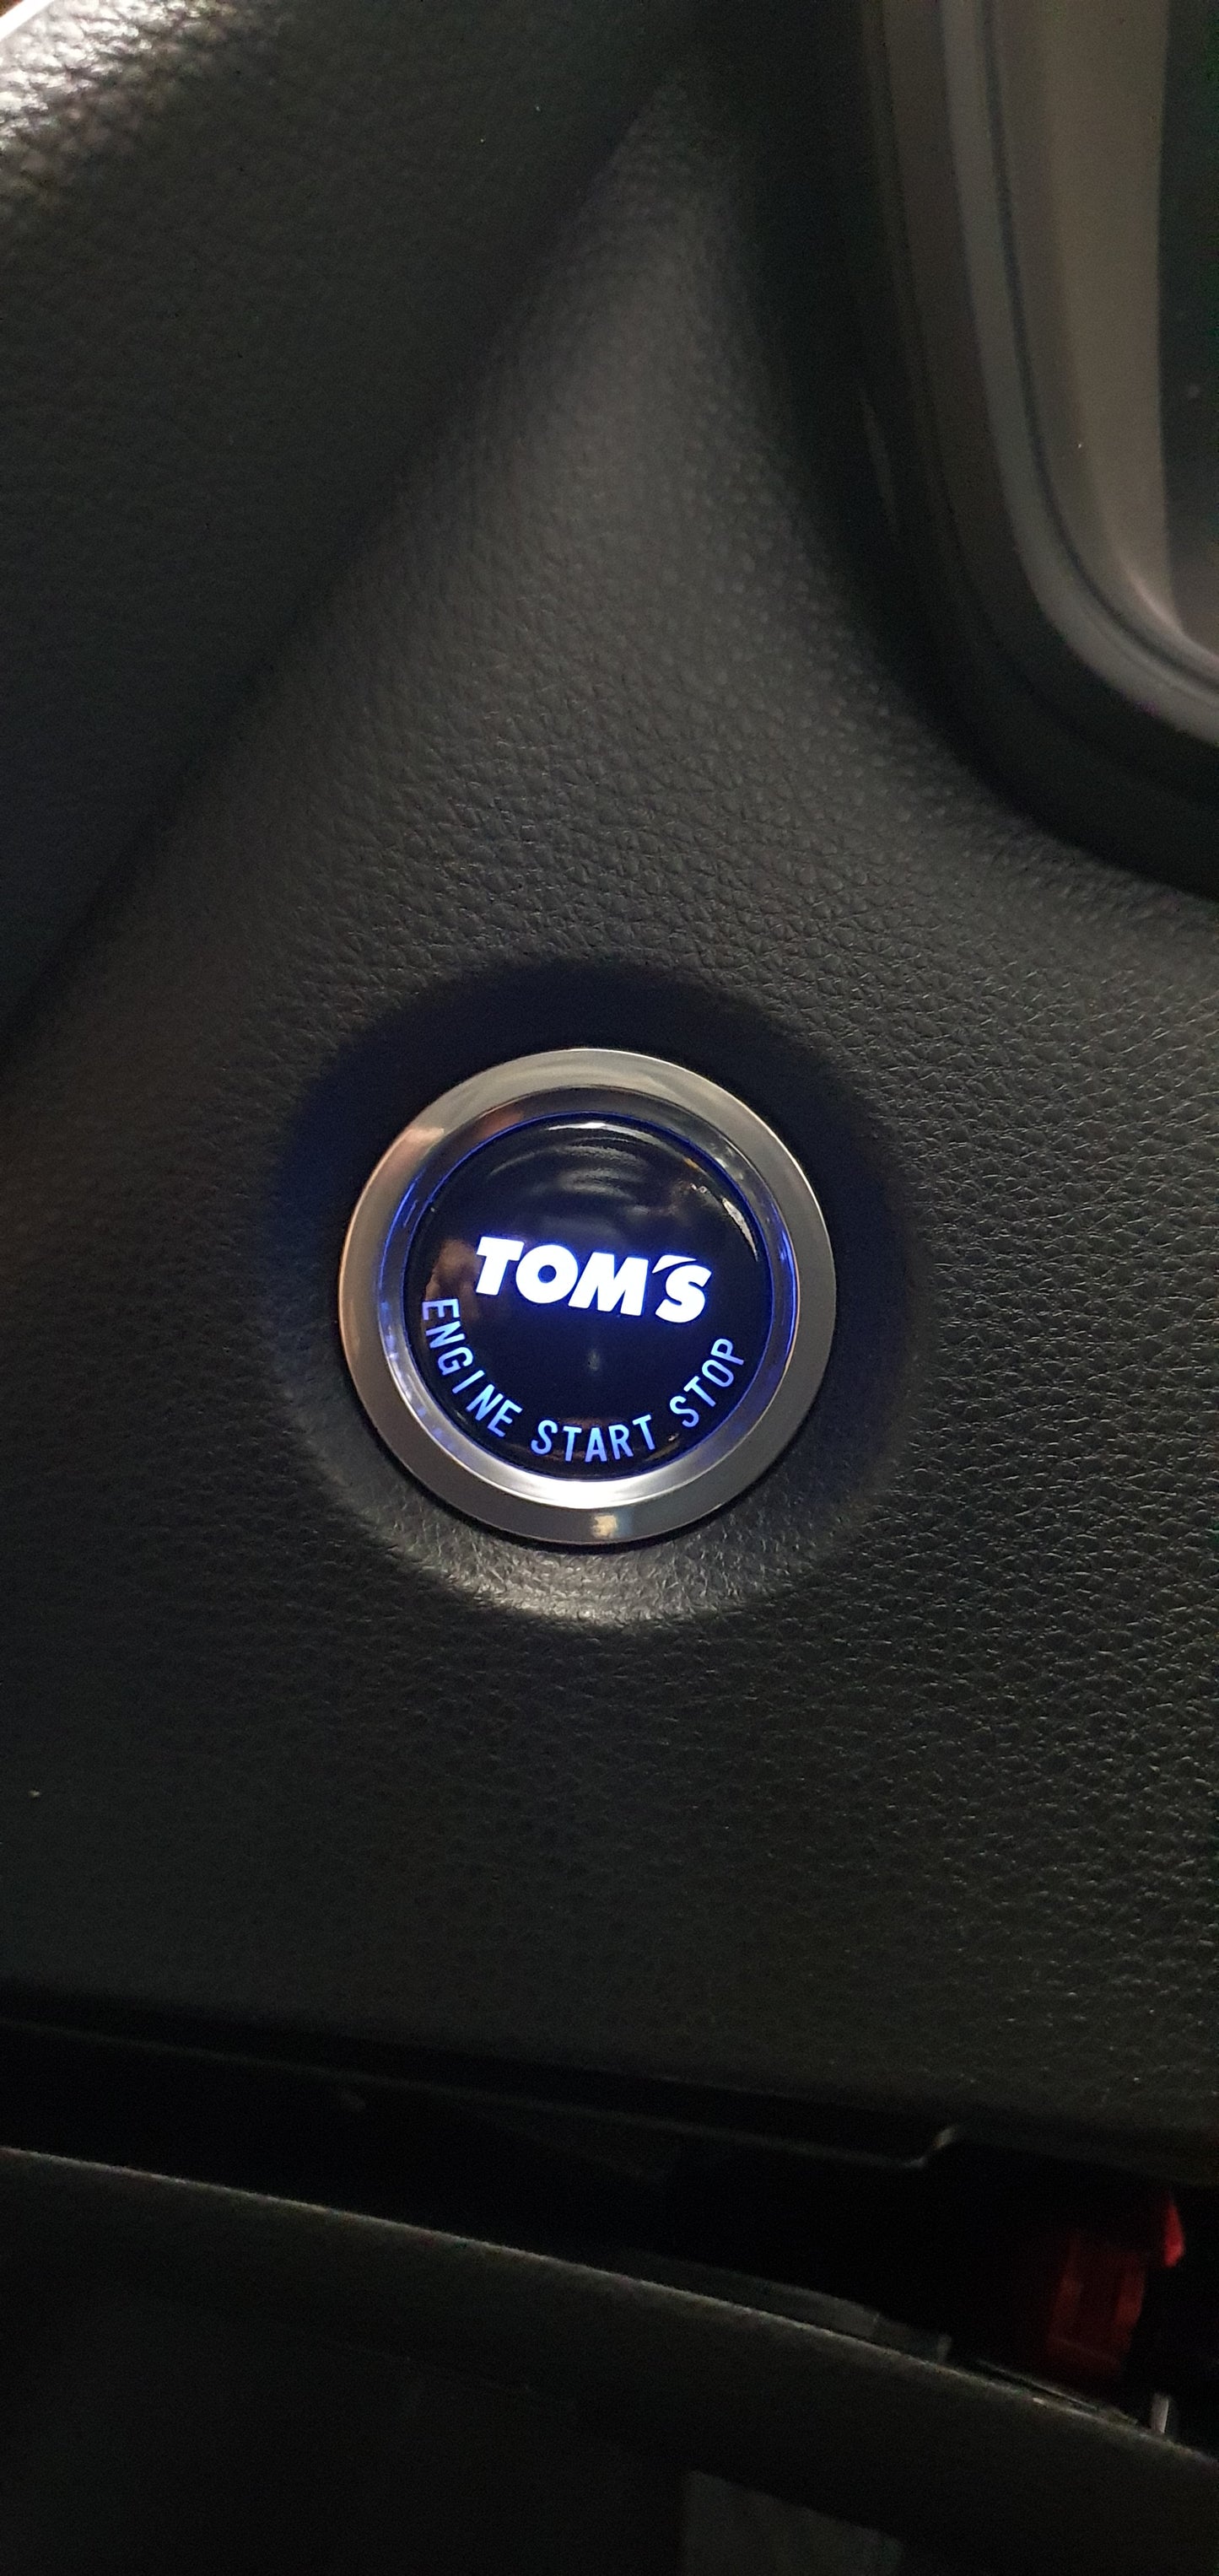 Toms Start button